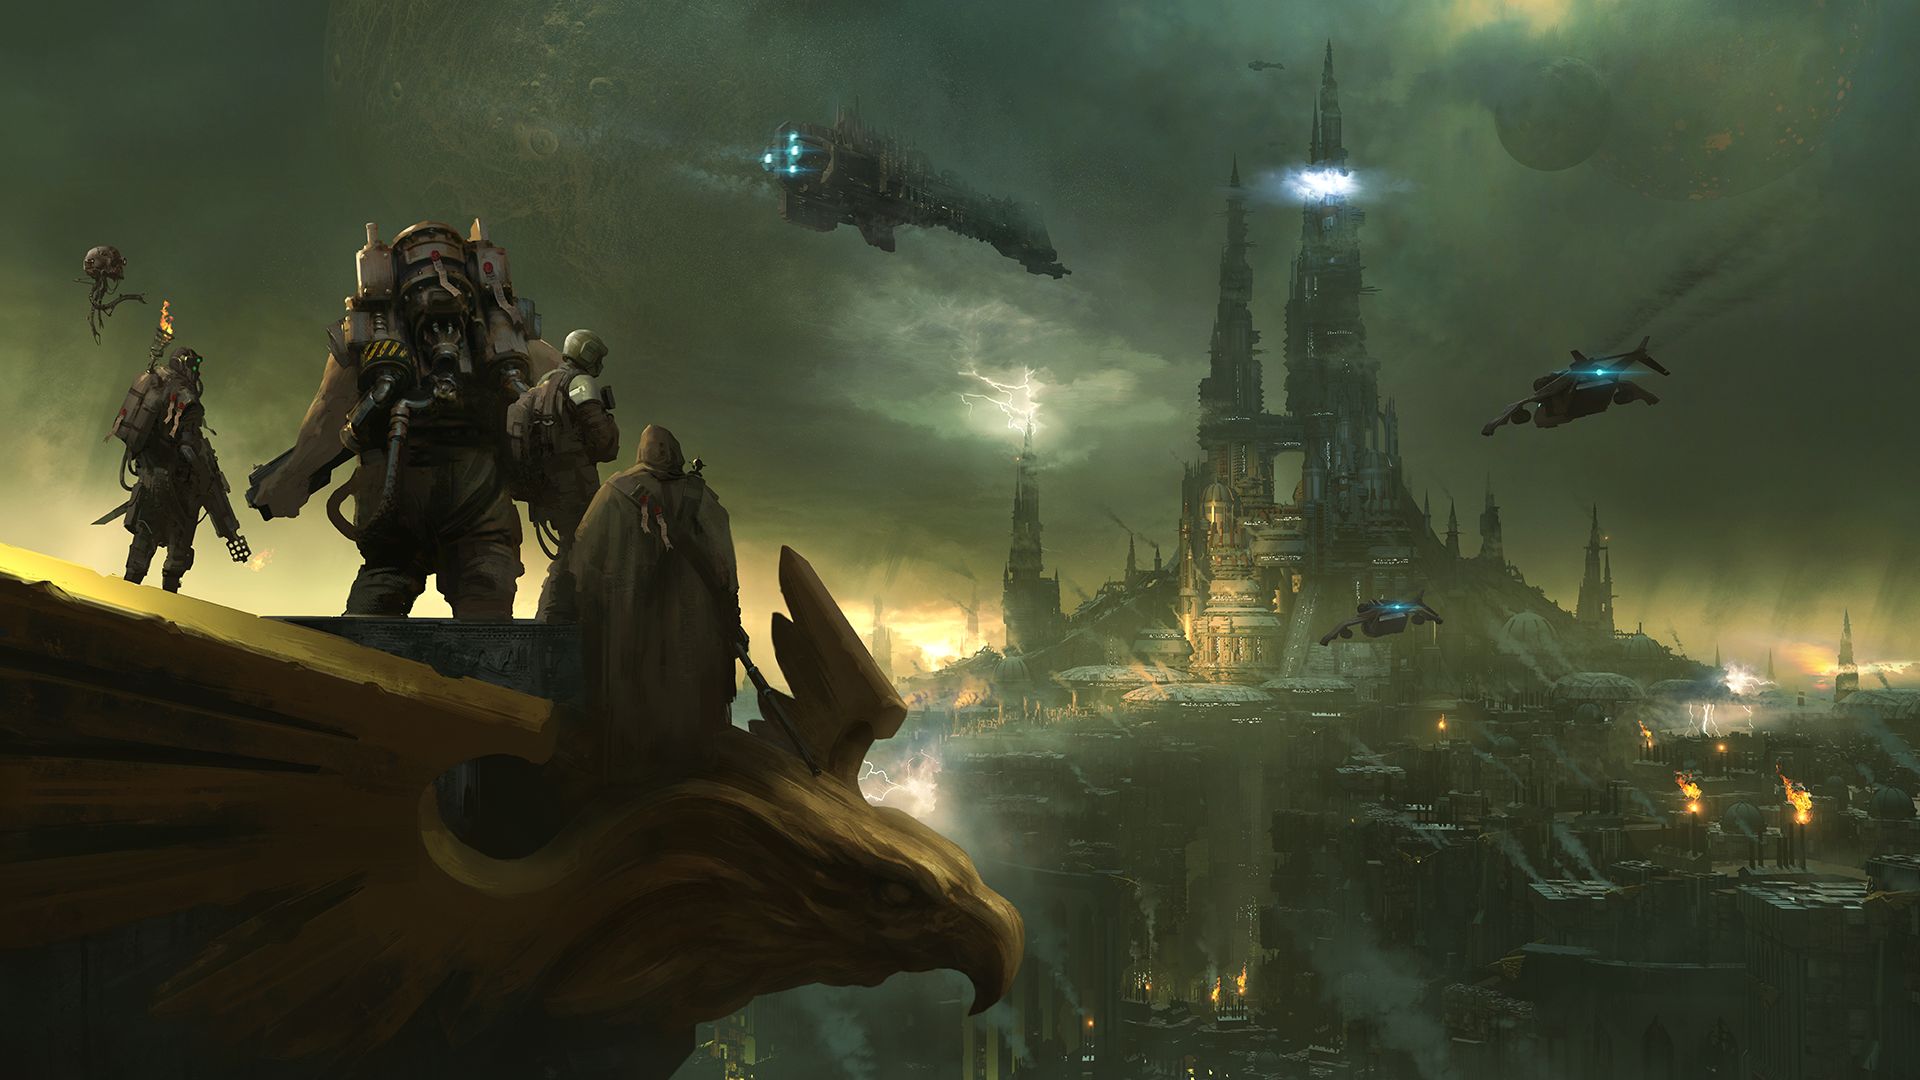 Релиз Warhammer 40,000 Darktide состоится 13 сентября на ПК (Steam, Microsoft Store) и Xbox Series (плюс в каталоге Game Pass).